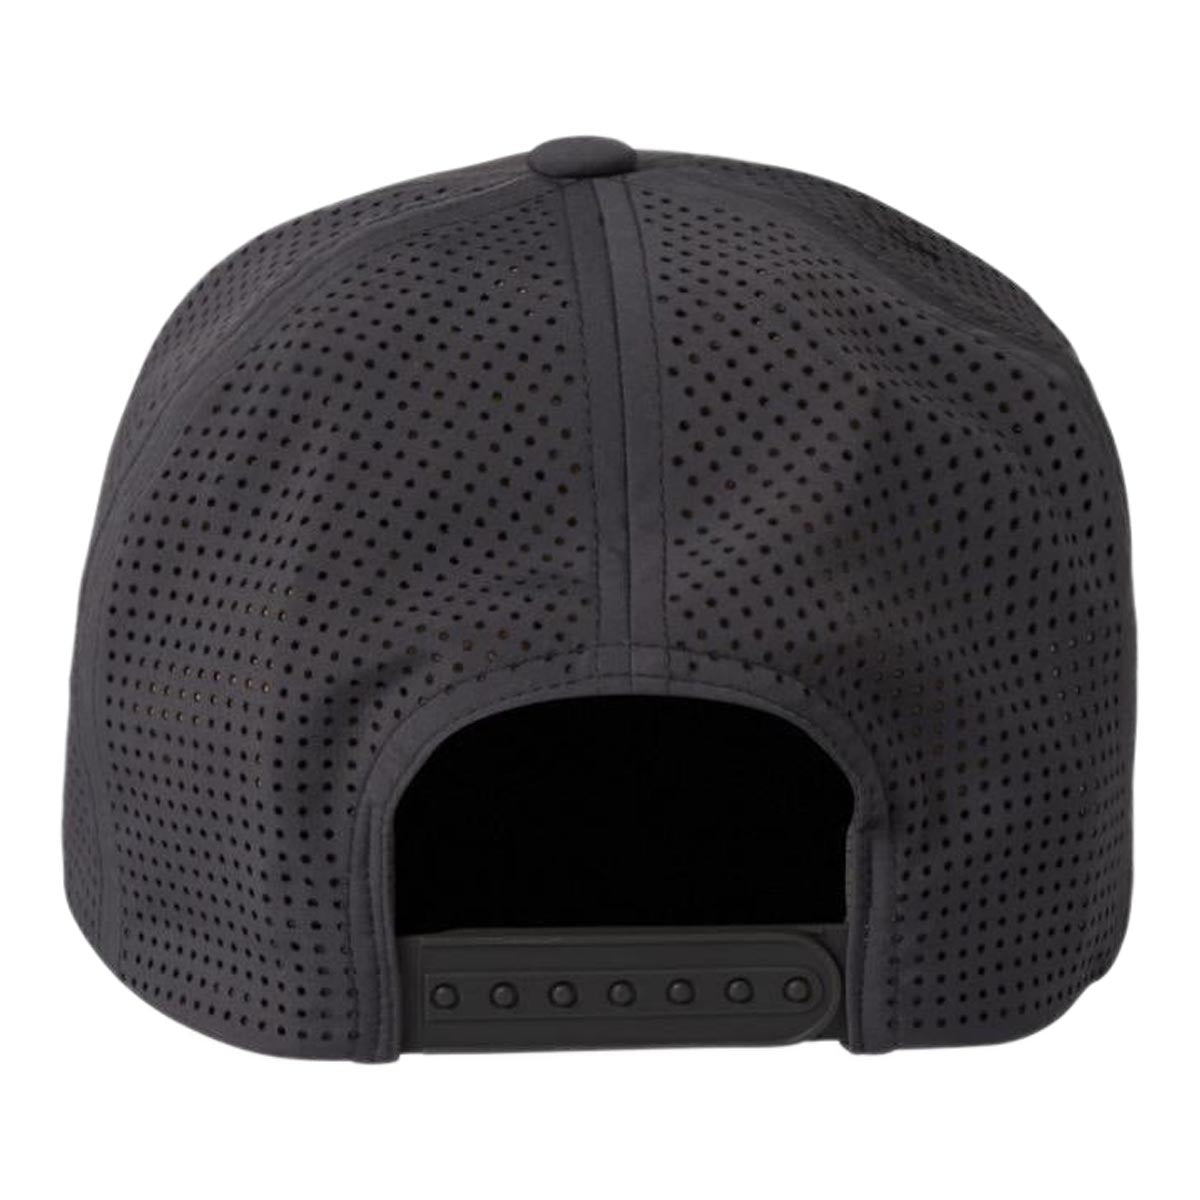 Brixton Crest X Mp Snapback Hat - Charcoal/Navy image 2